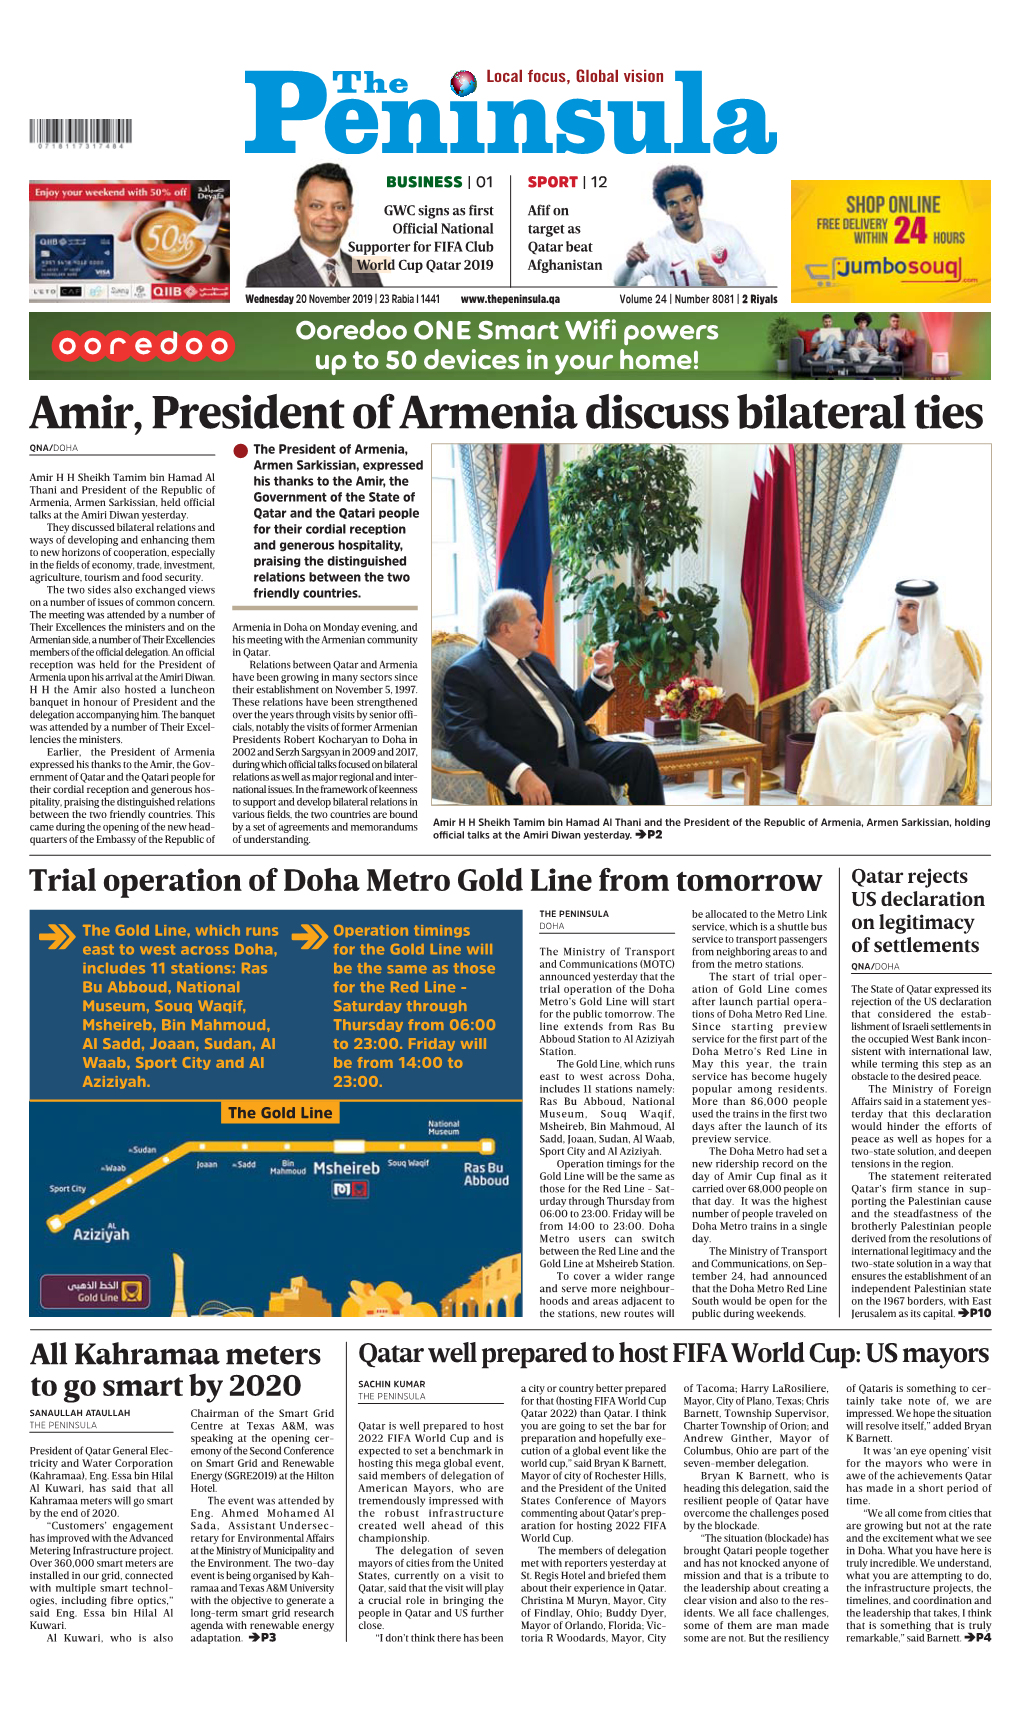 Amir, President of Armenia Discuss Bilateral Ties